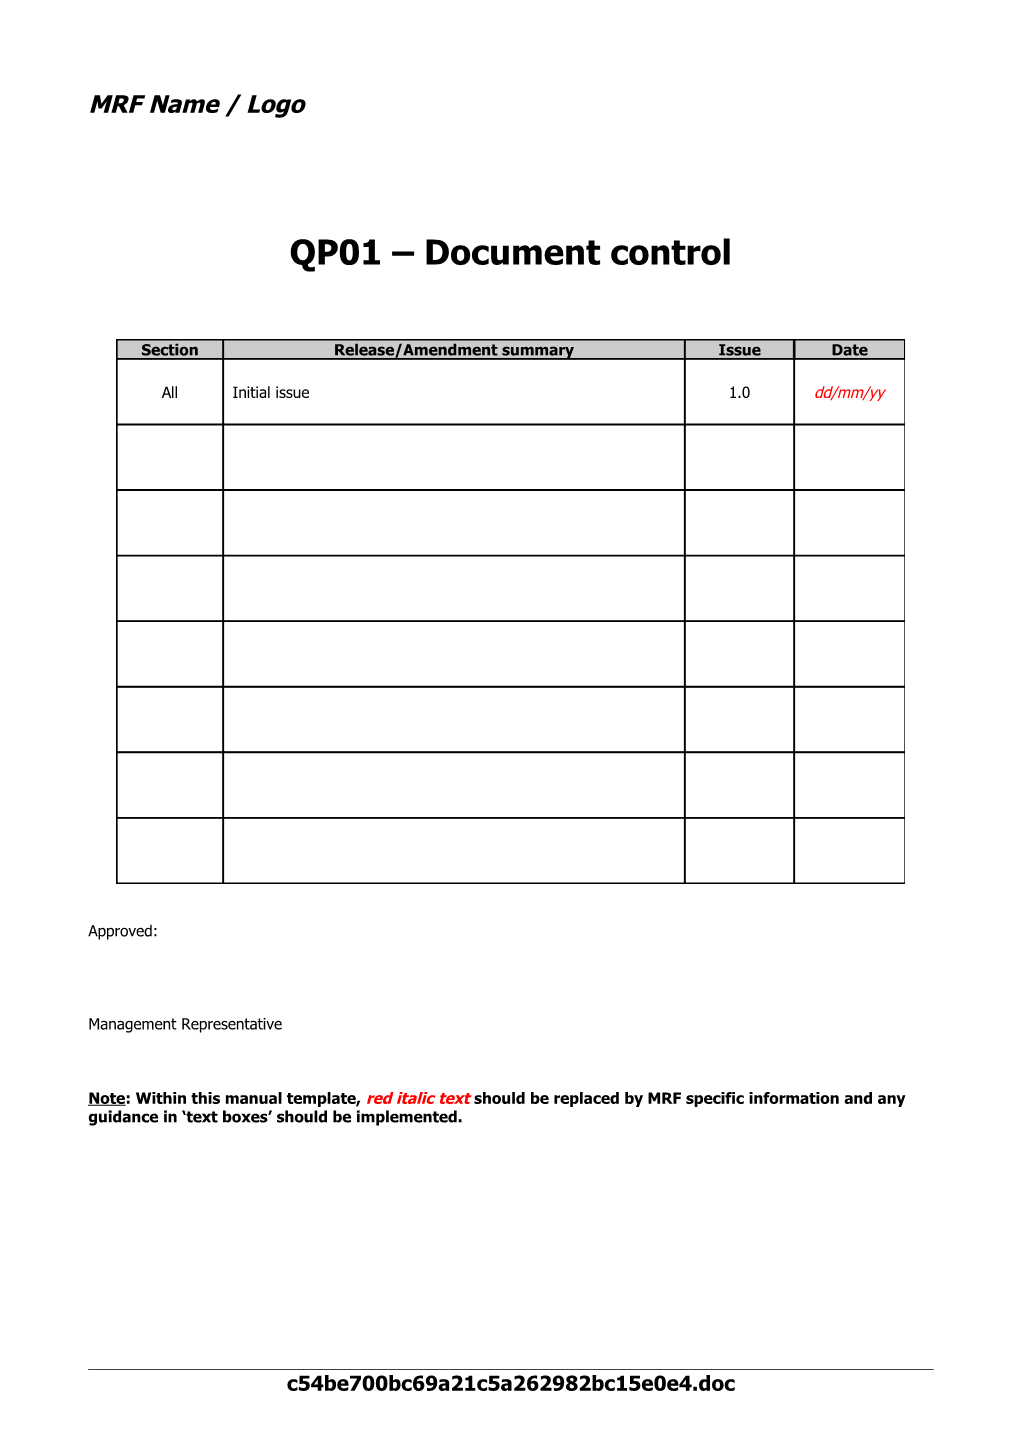 QP01 Document Control